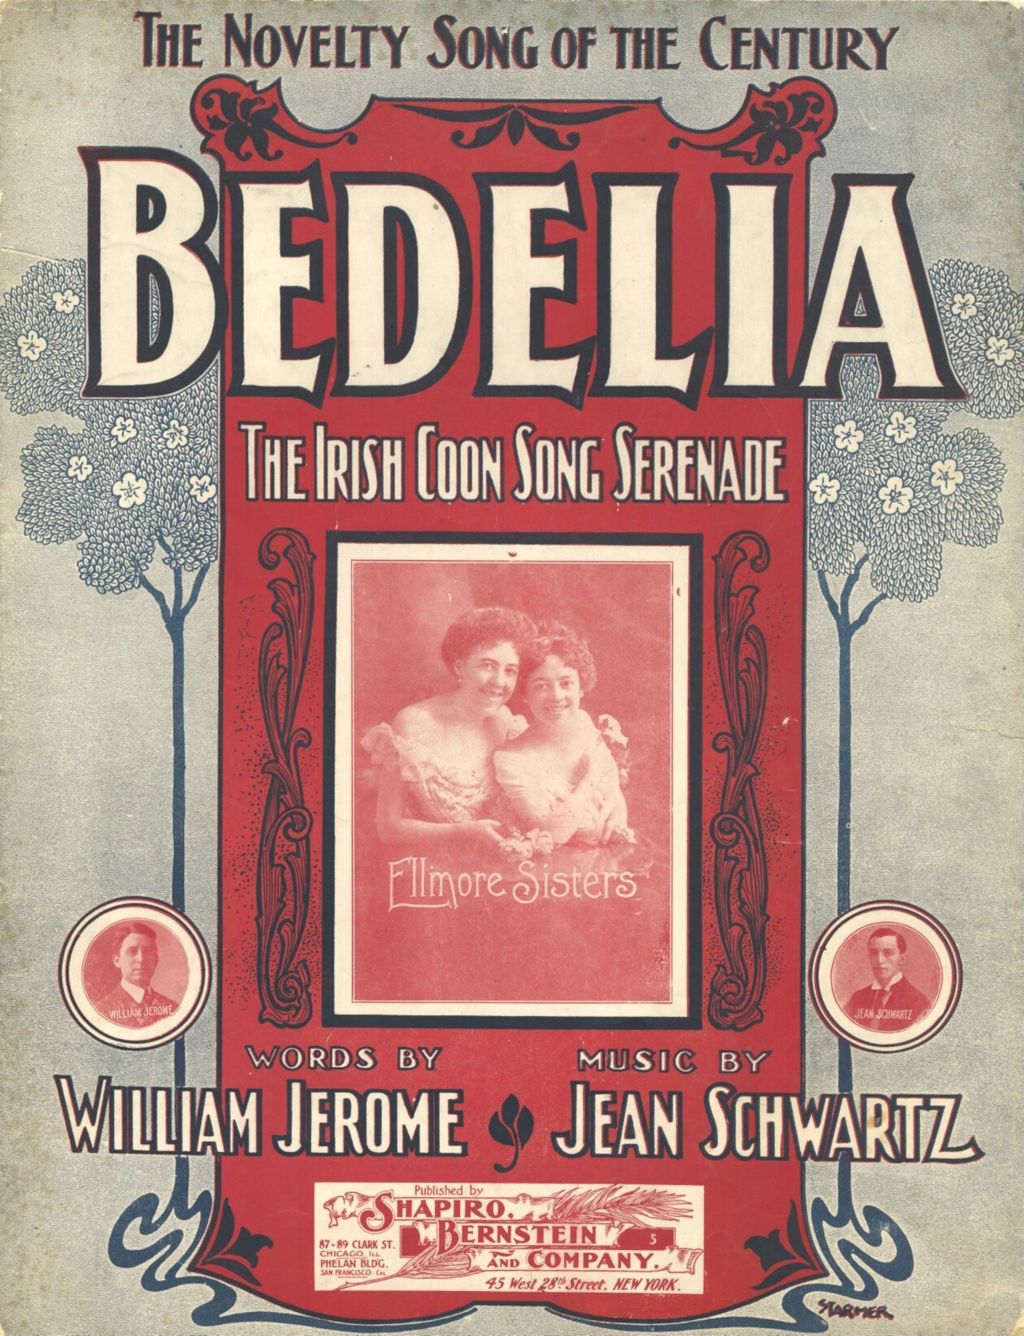 Miniature of Bedelia